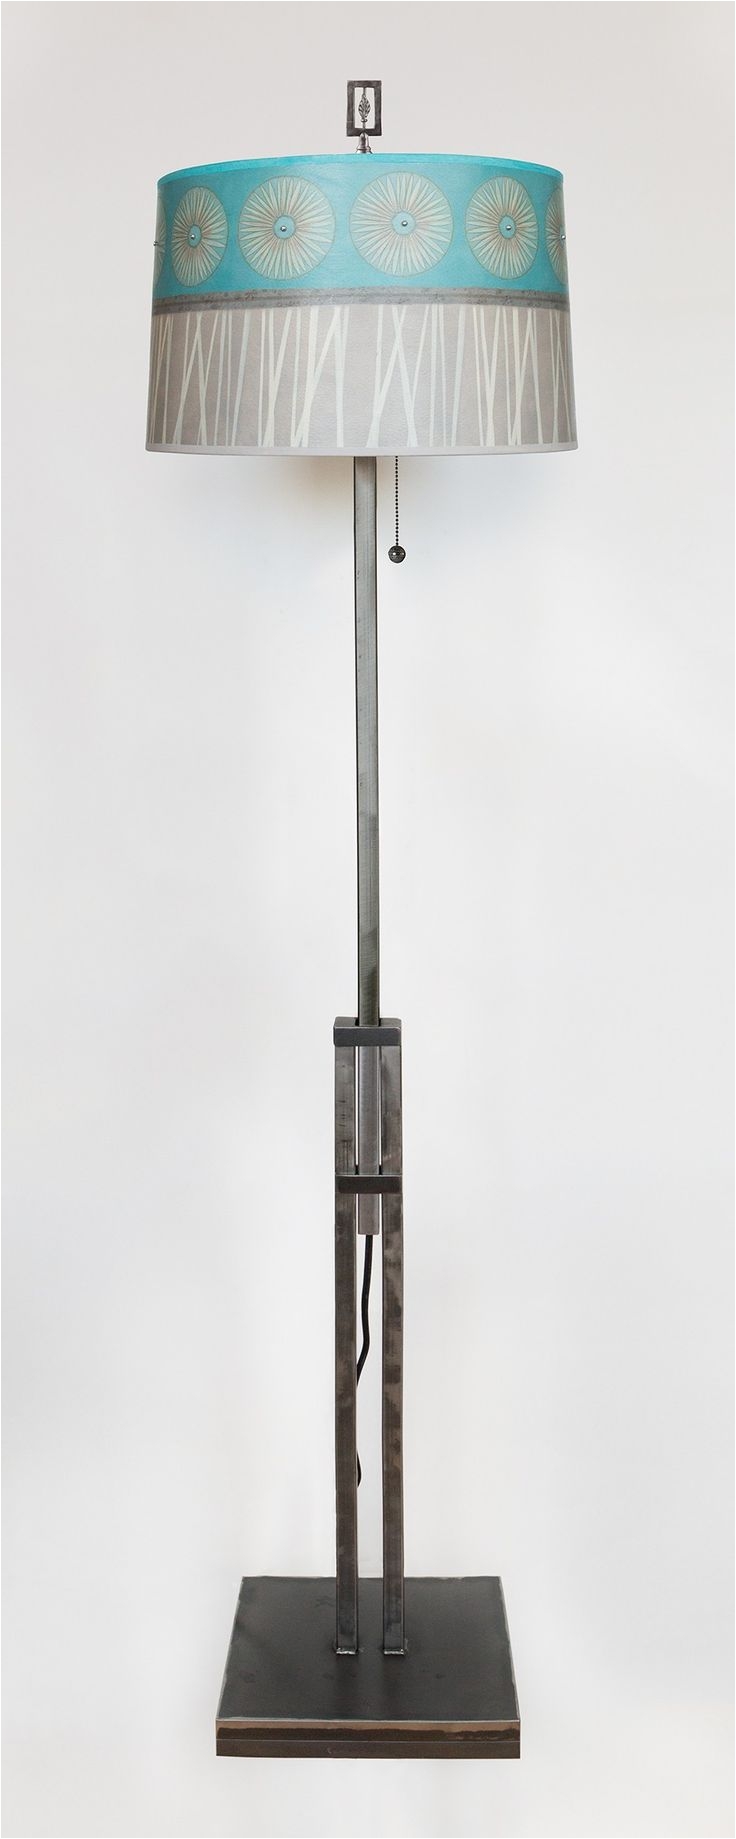 adjustable height steel floor lamp with large drum shade in pool